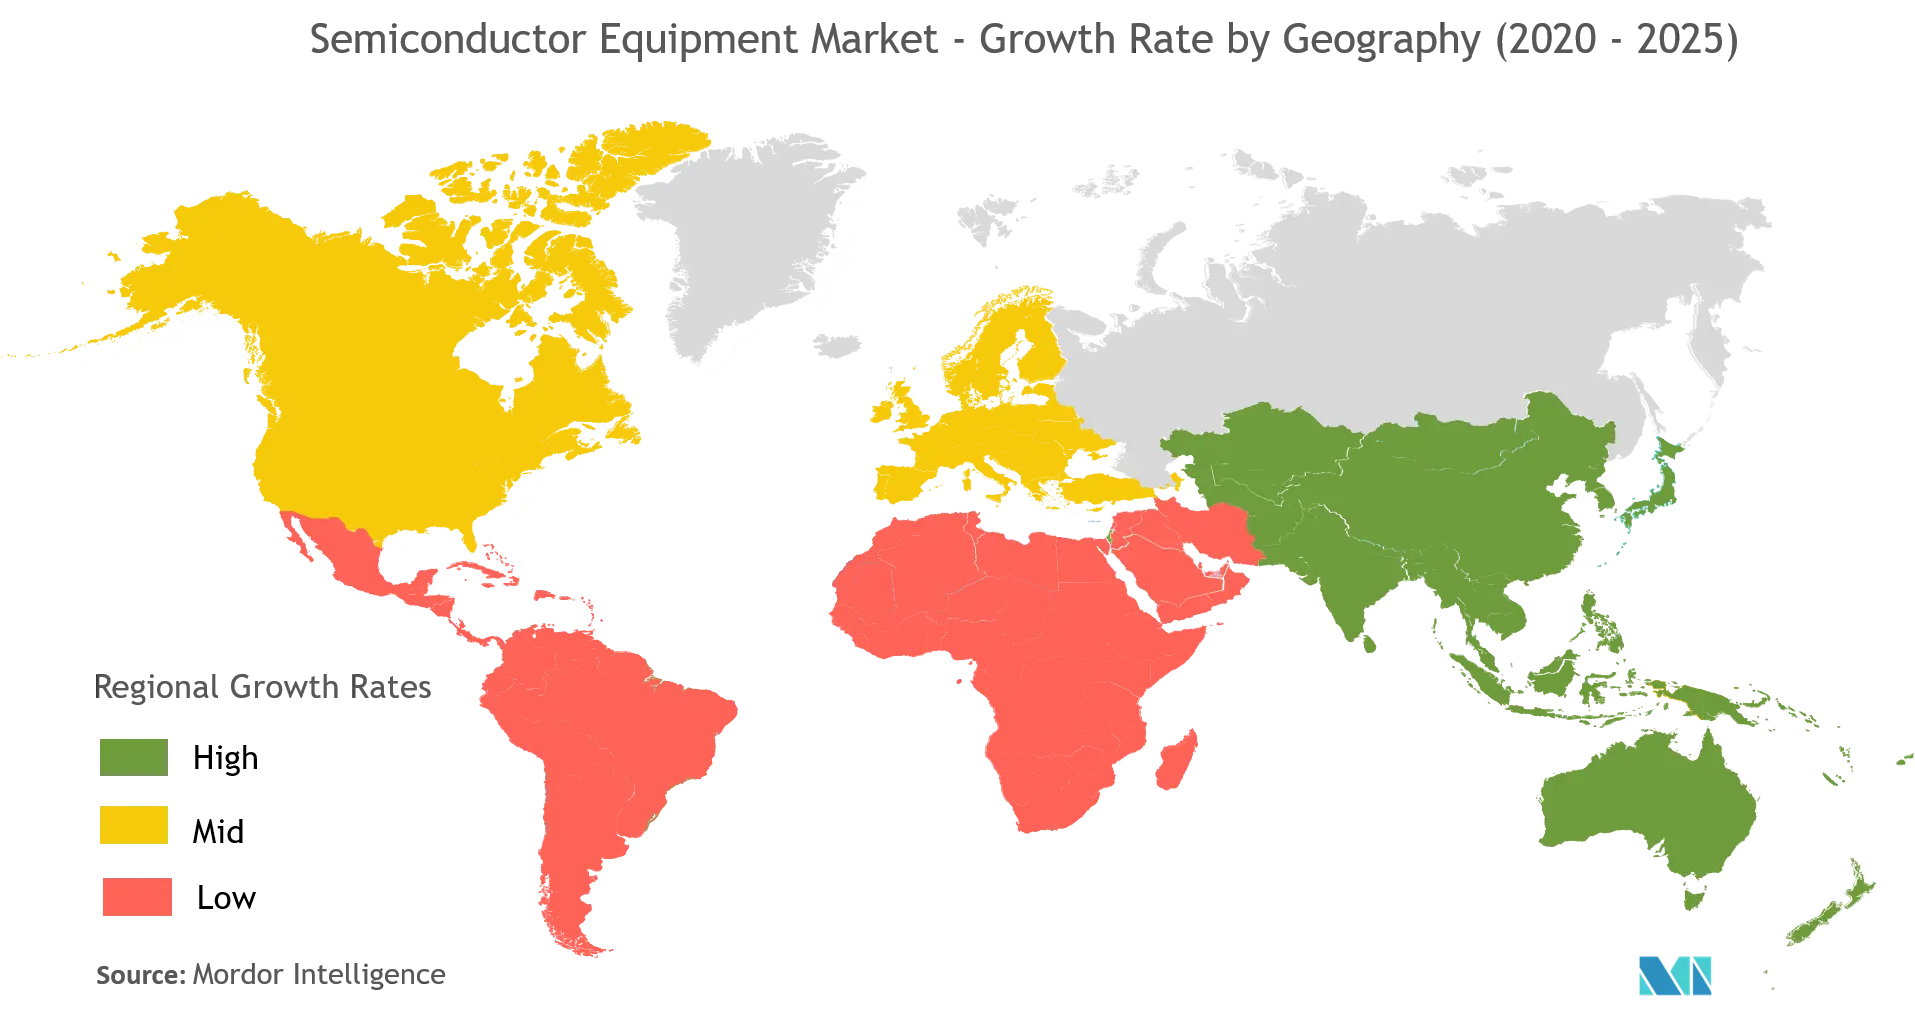 Semiconductor Equipment Market Growth by Region